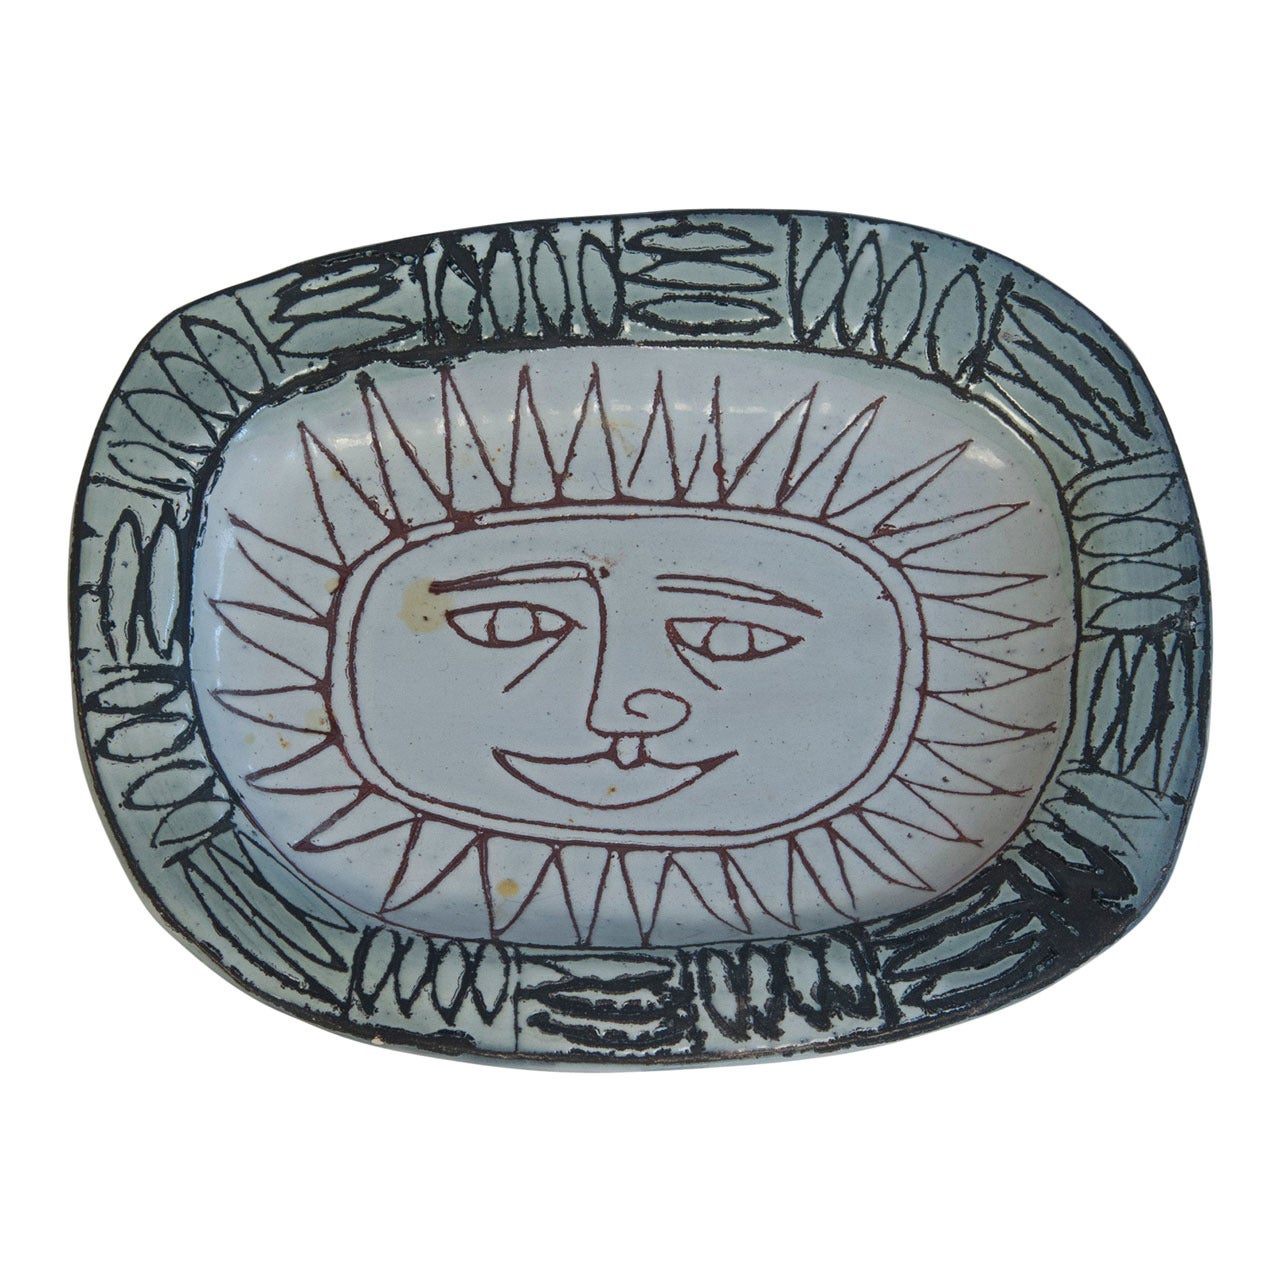 Sun-face Ceramic Dish by J. Pouchain